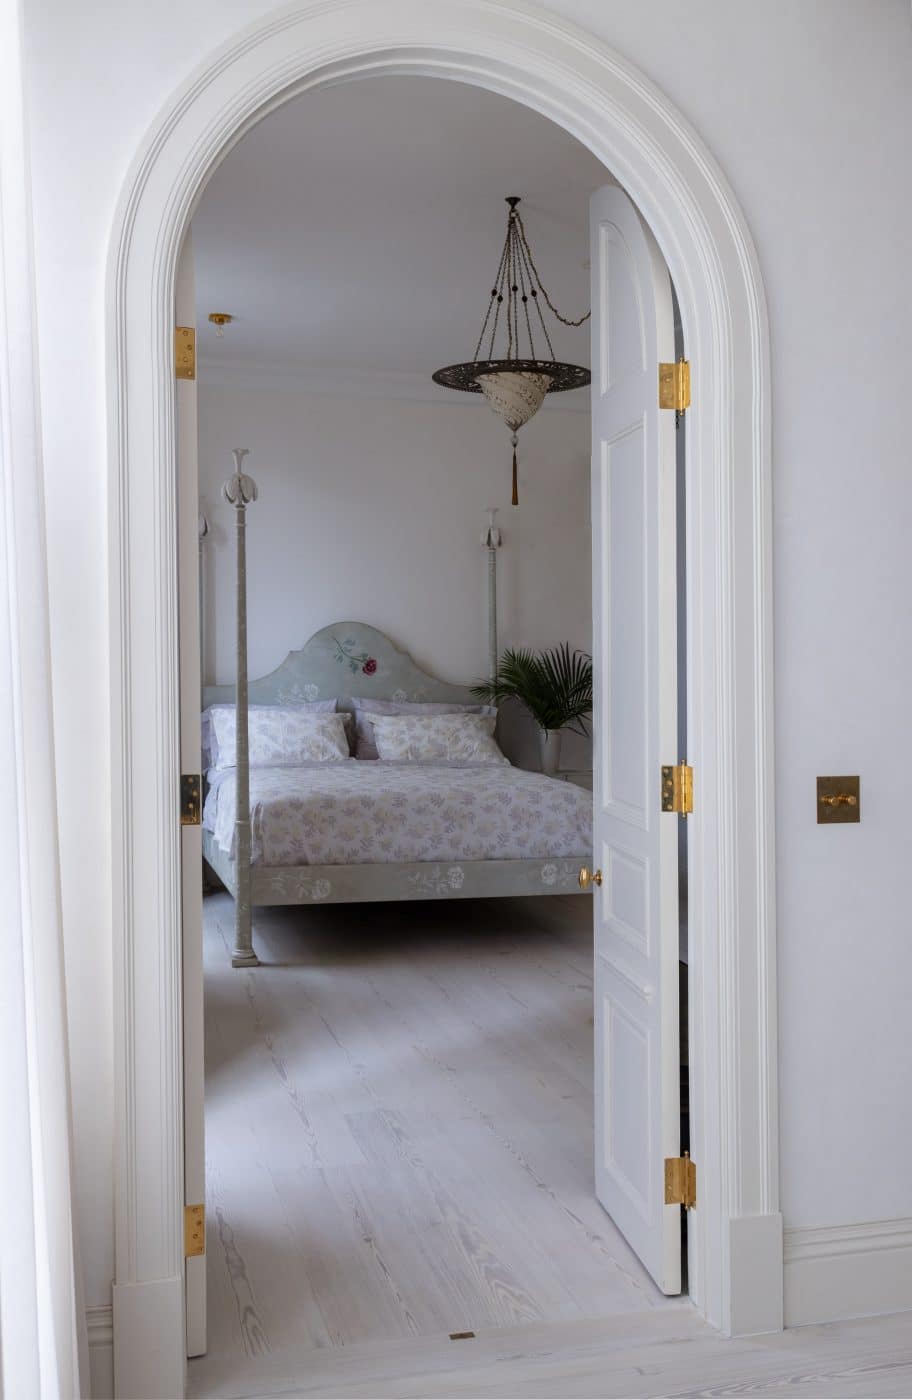 Bedroom of a Soho loft home designed by White Arrow.